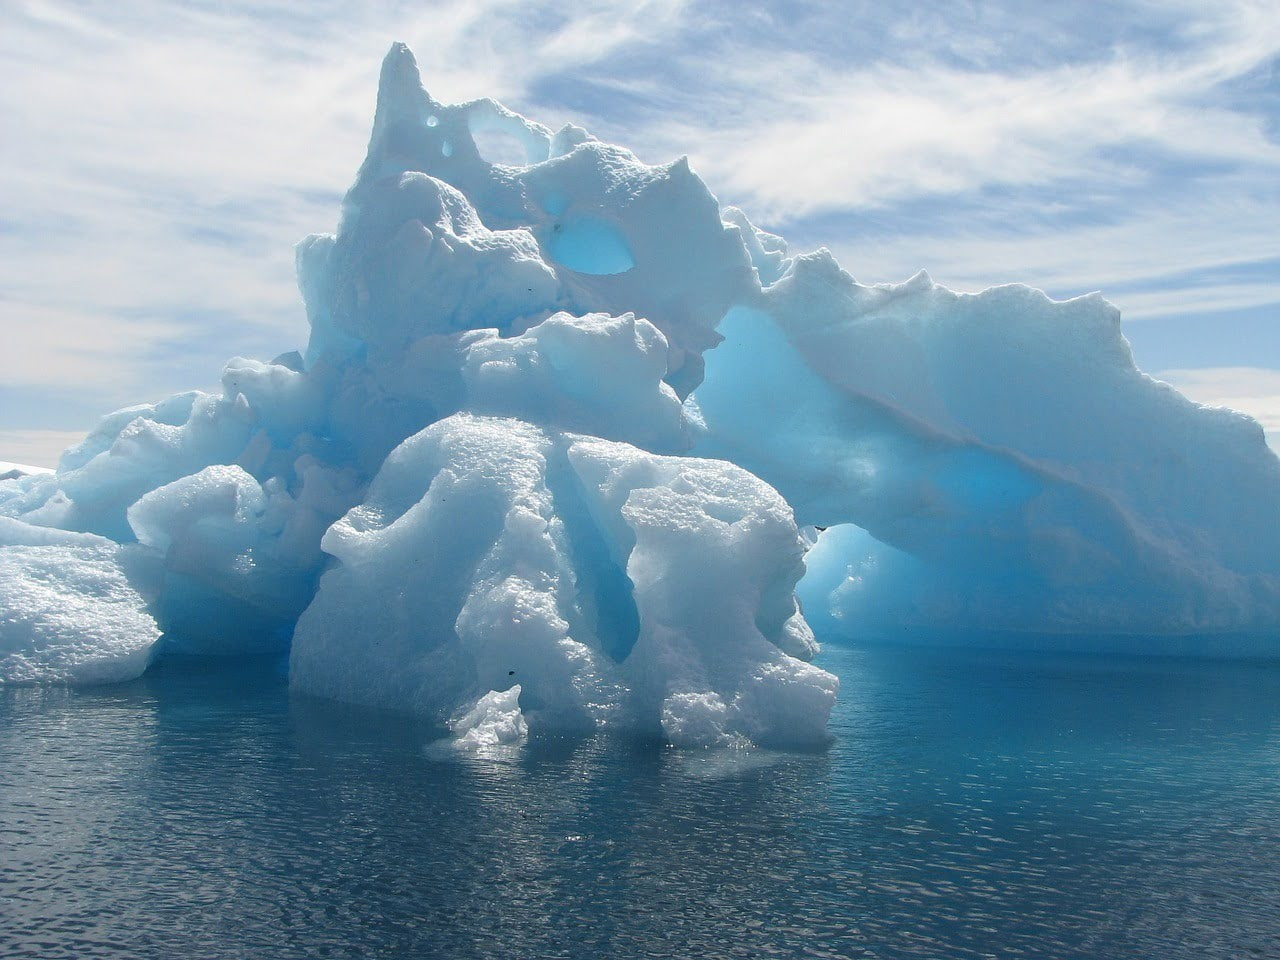 Arctic, ice, water, cold temperature, frozen, winter, sea, snow